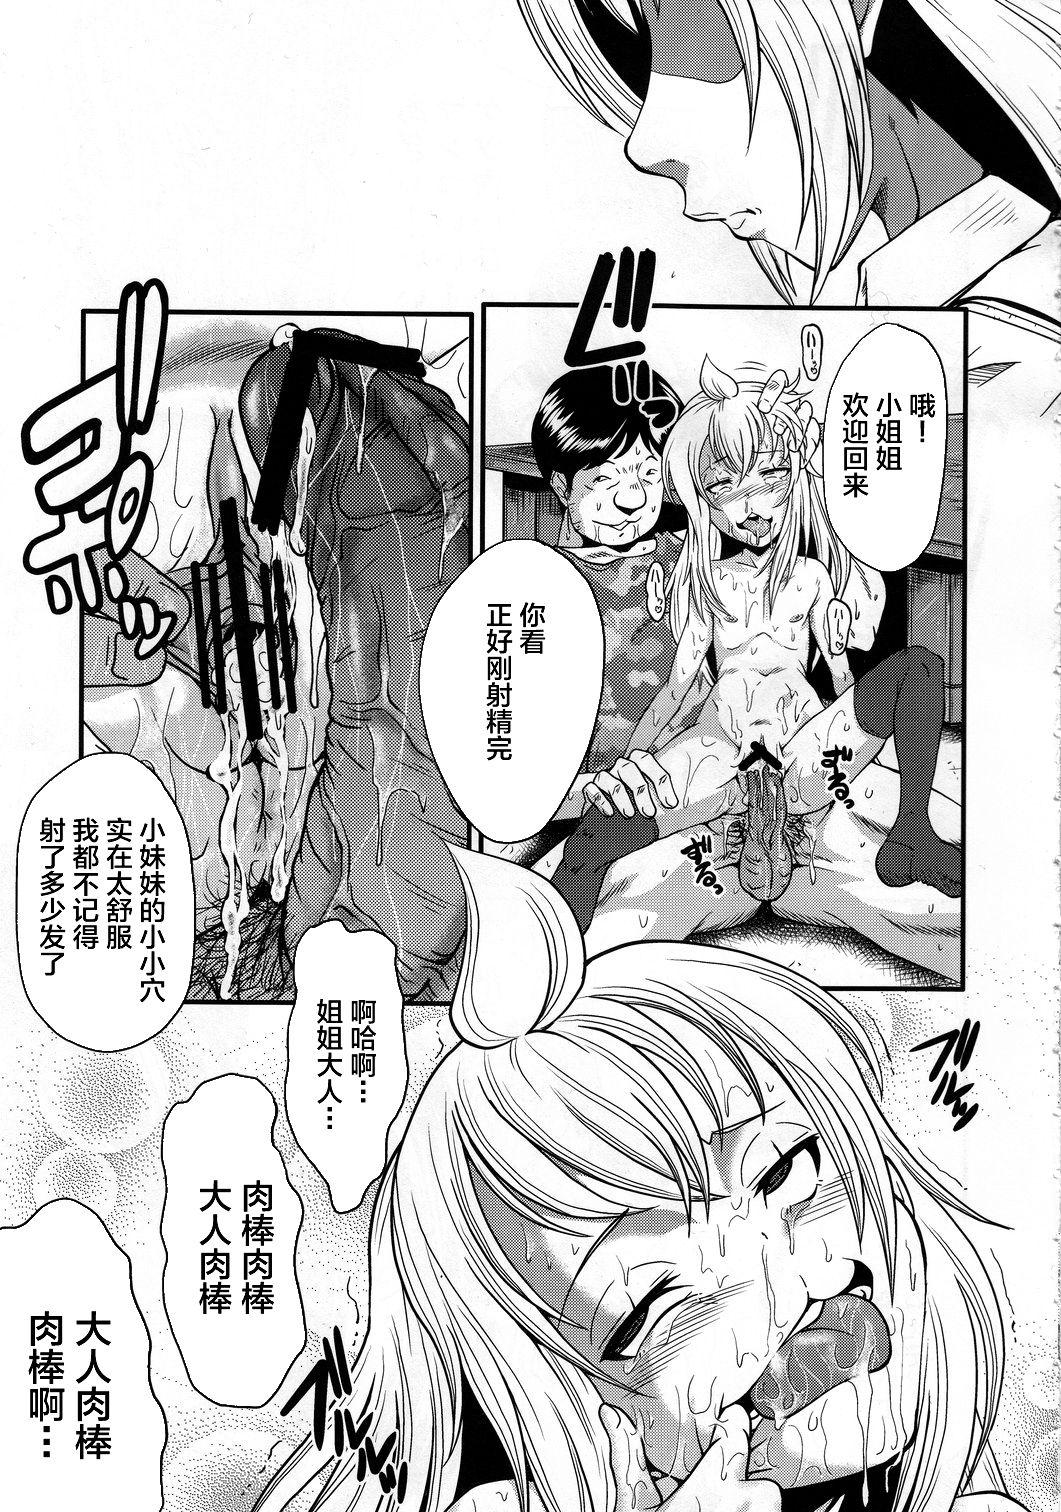 Girlfriend Urabambi Vol. 41 Minami-ke - Minami ke Pain - Page 6